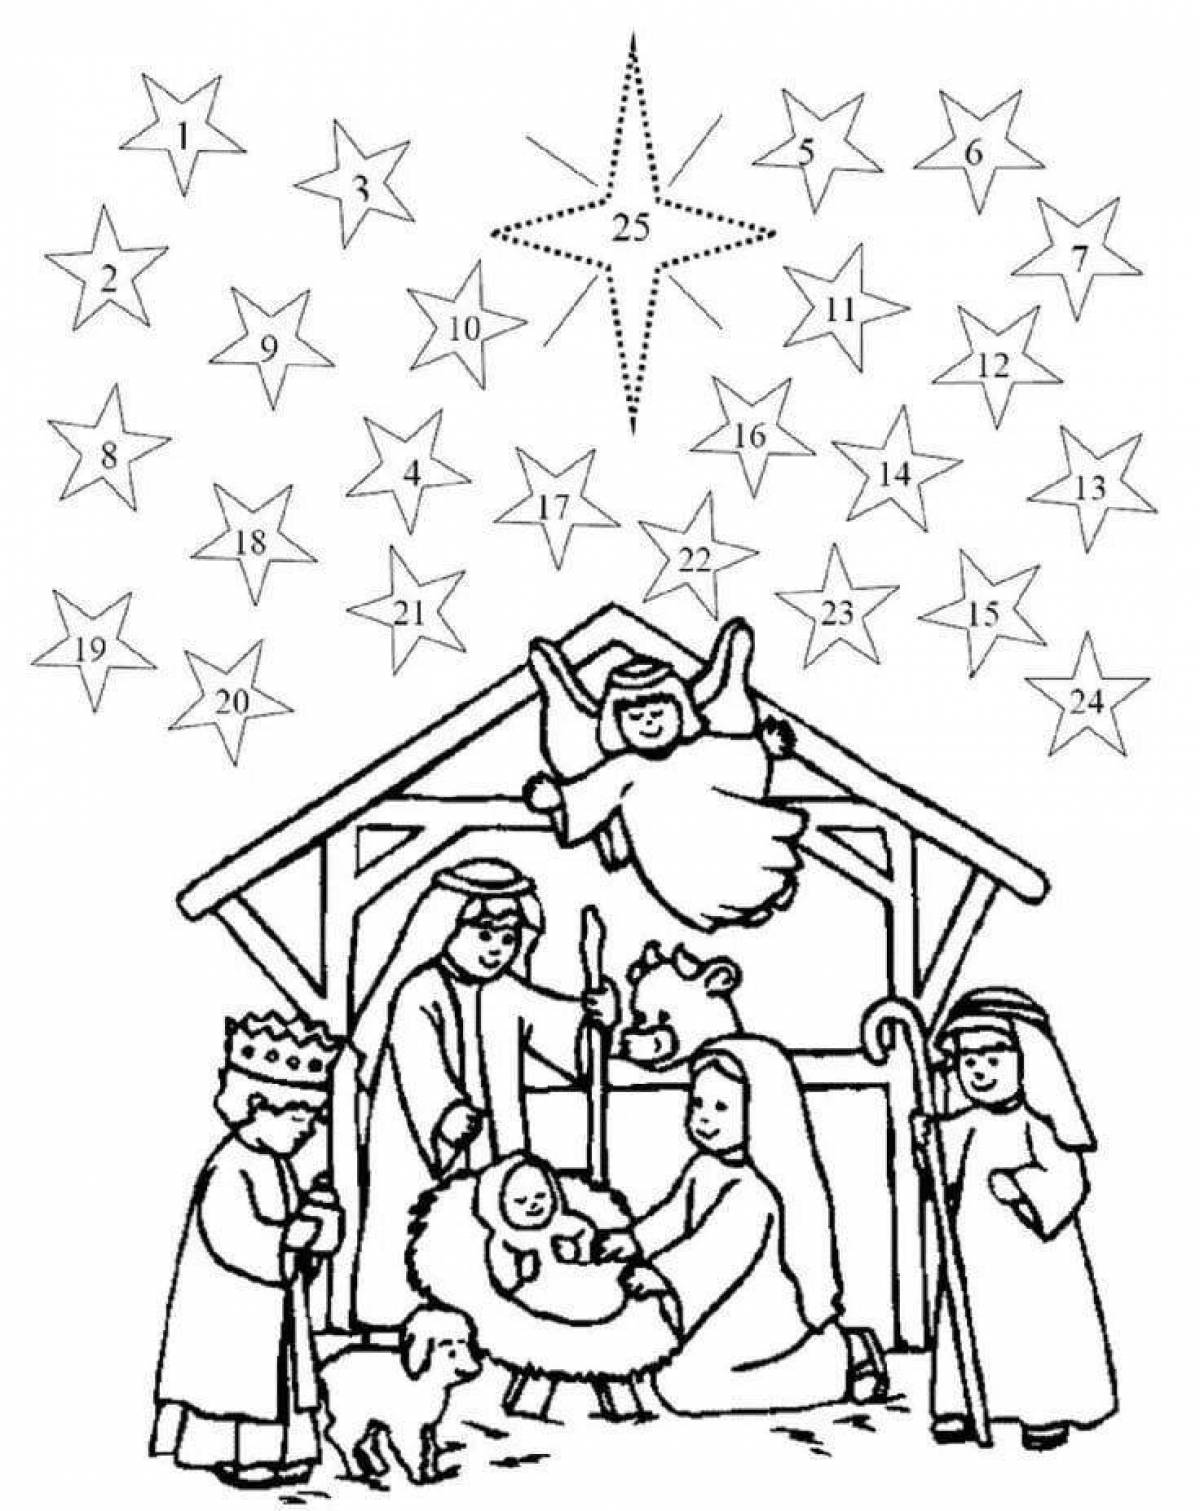 Great nativity scene coloring book for kids